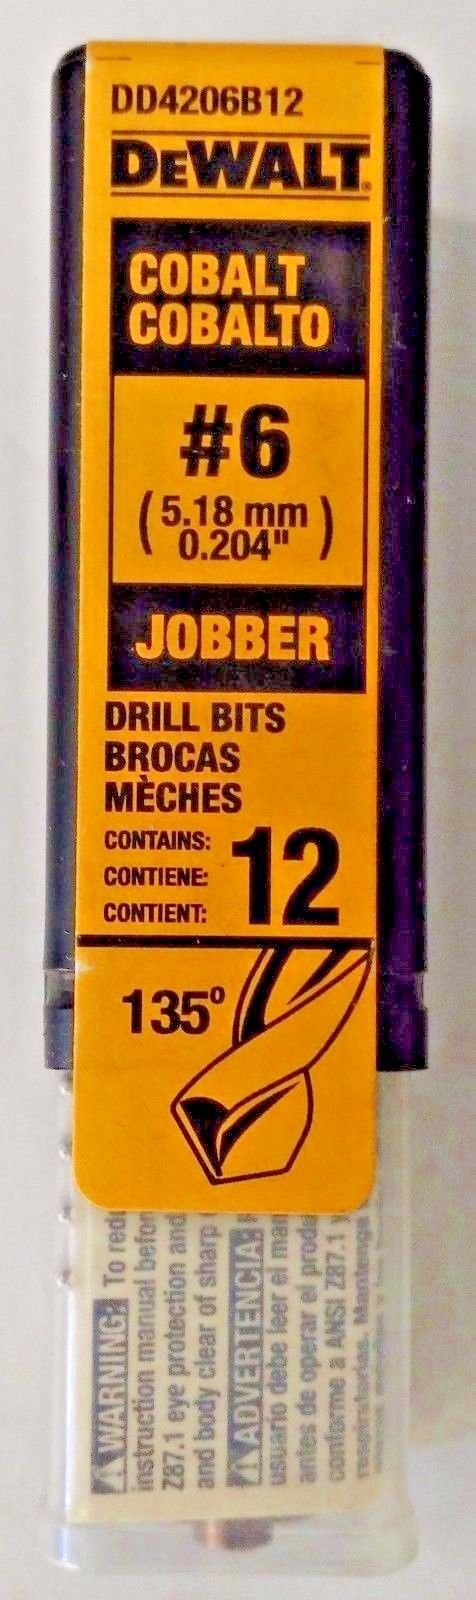 Dewalt DD4206B12 #6 Wire Cobalt Jobber Length Drill Bits 12 Pack Germany